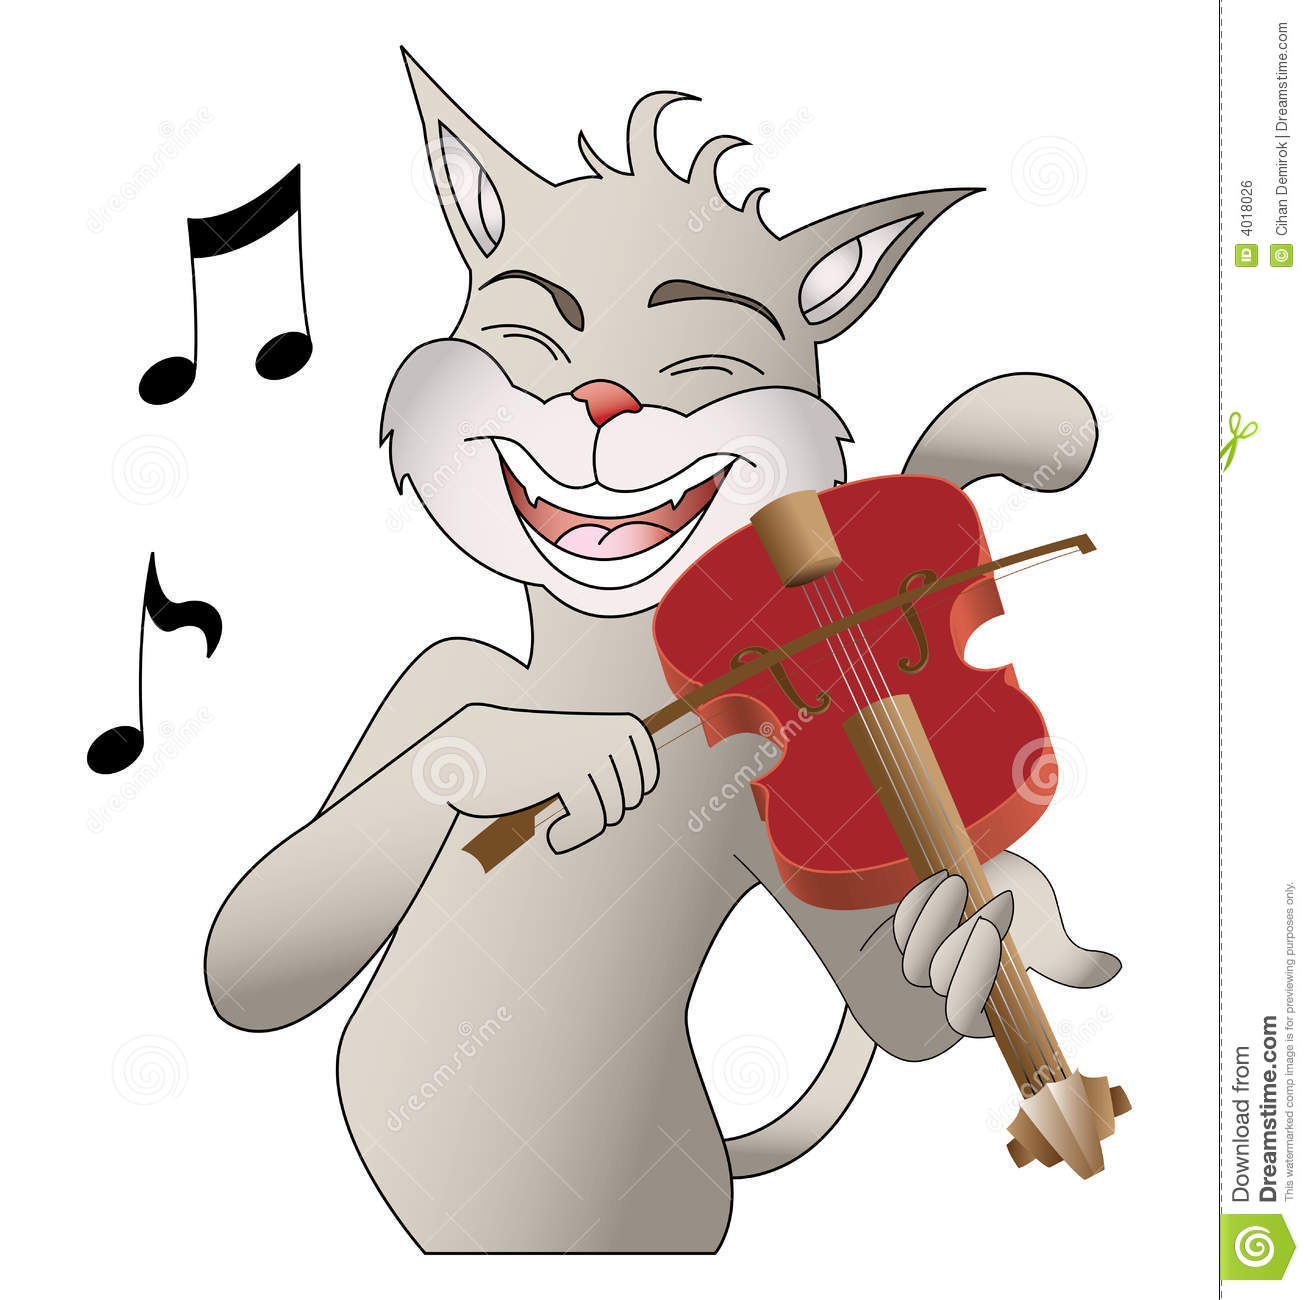 Singing Cat Royalty Free Stock Image   Image  4018026